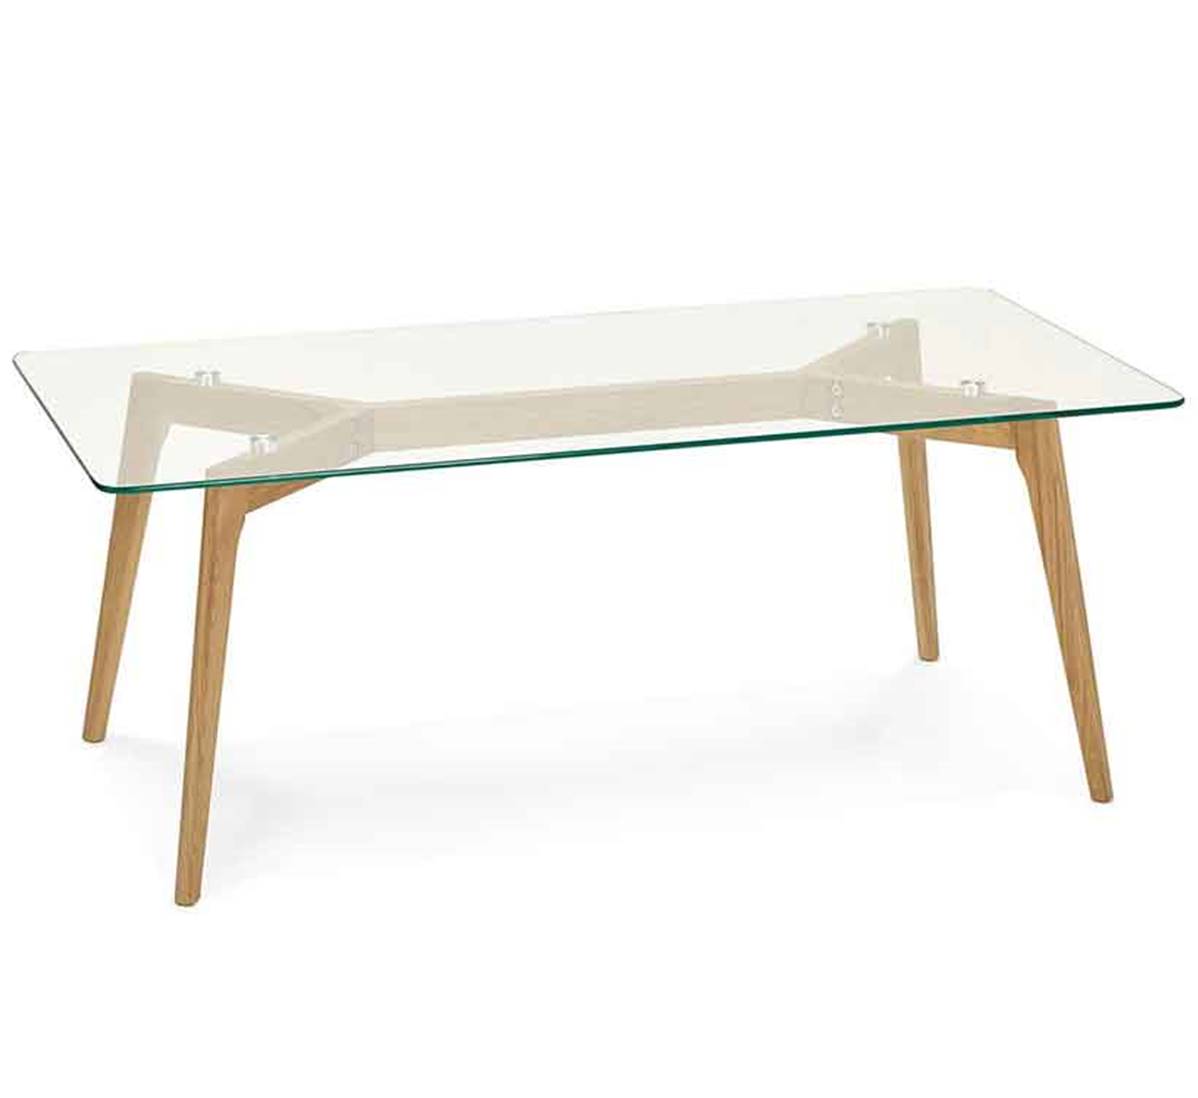 Table basse scandinave rectangulaire Kaffetäbel verre 4 pieds bois